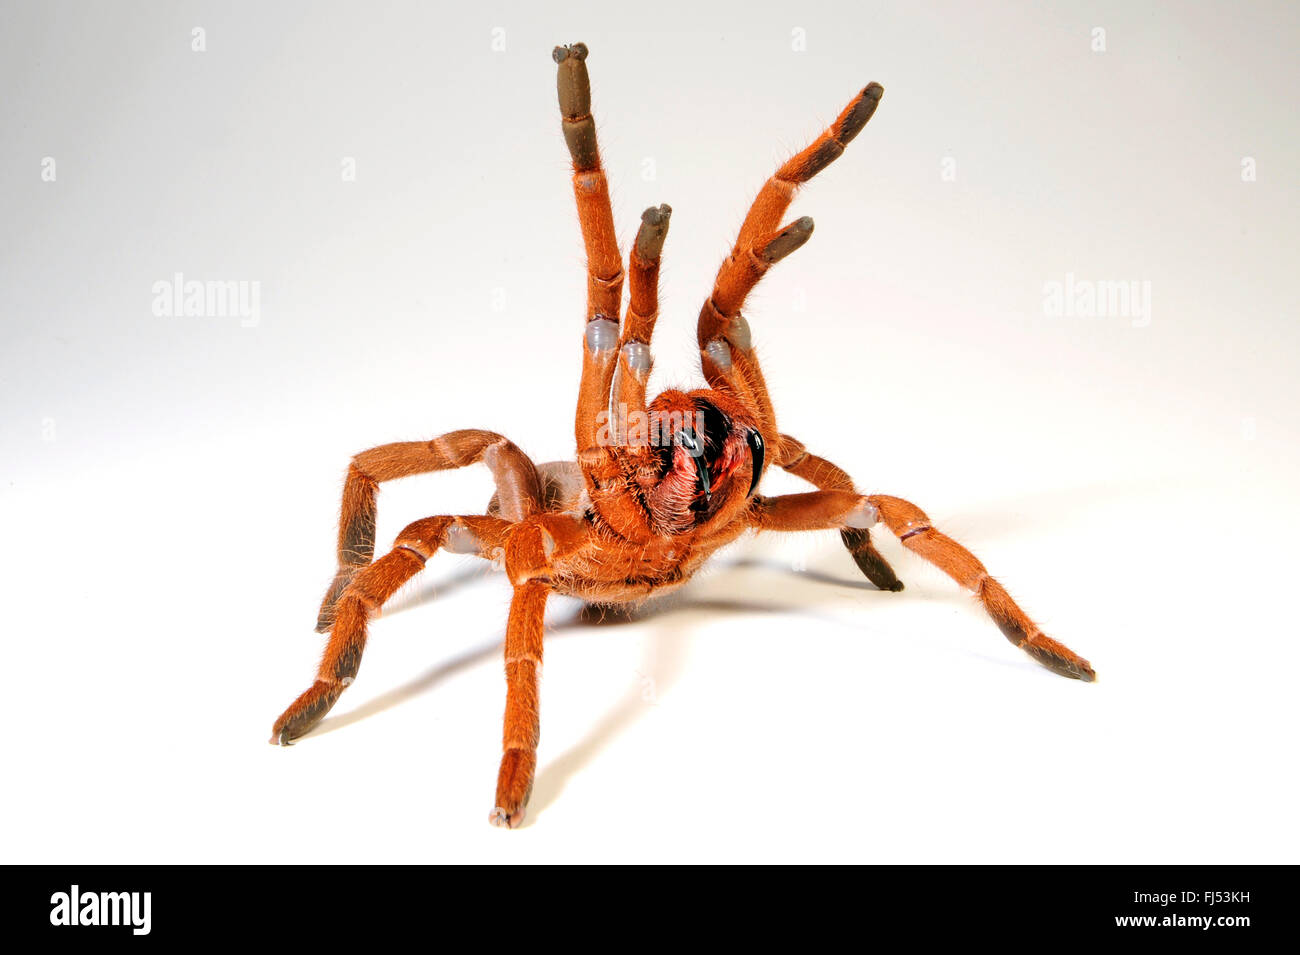 King baboon spider, King baboon tarantula (Pelinobius muticus, Citharischius crawshayi), in defense posture with extended chelicerae Stock Photo